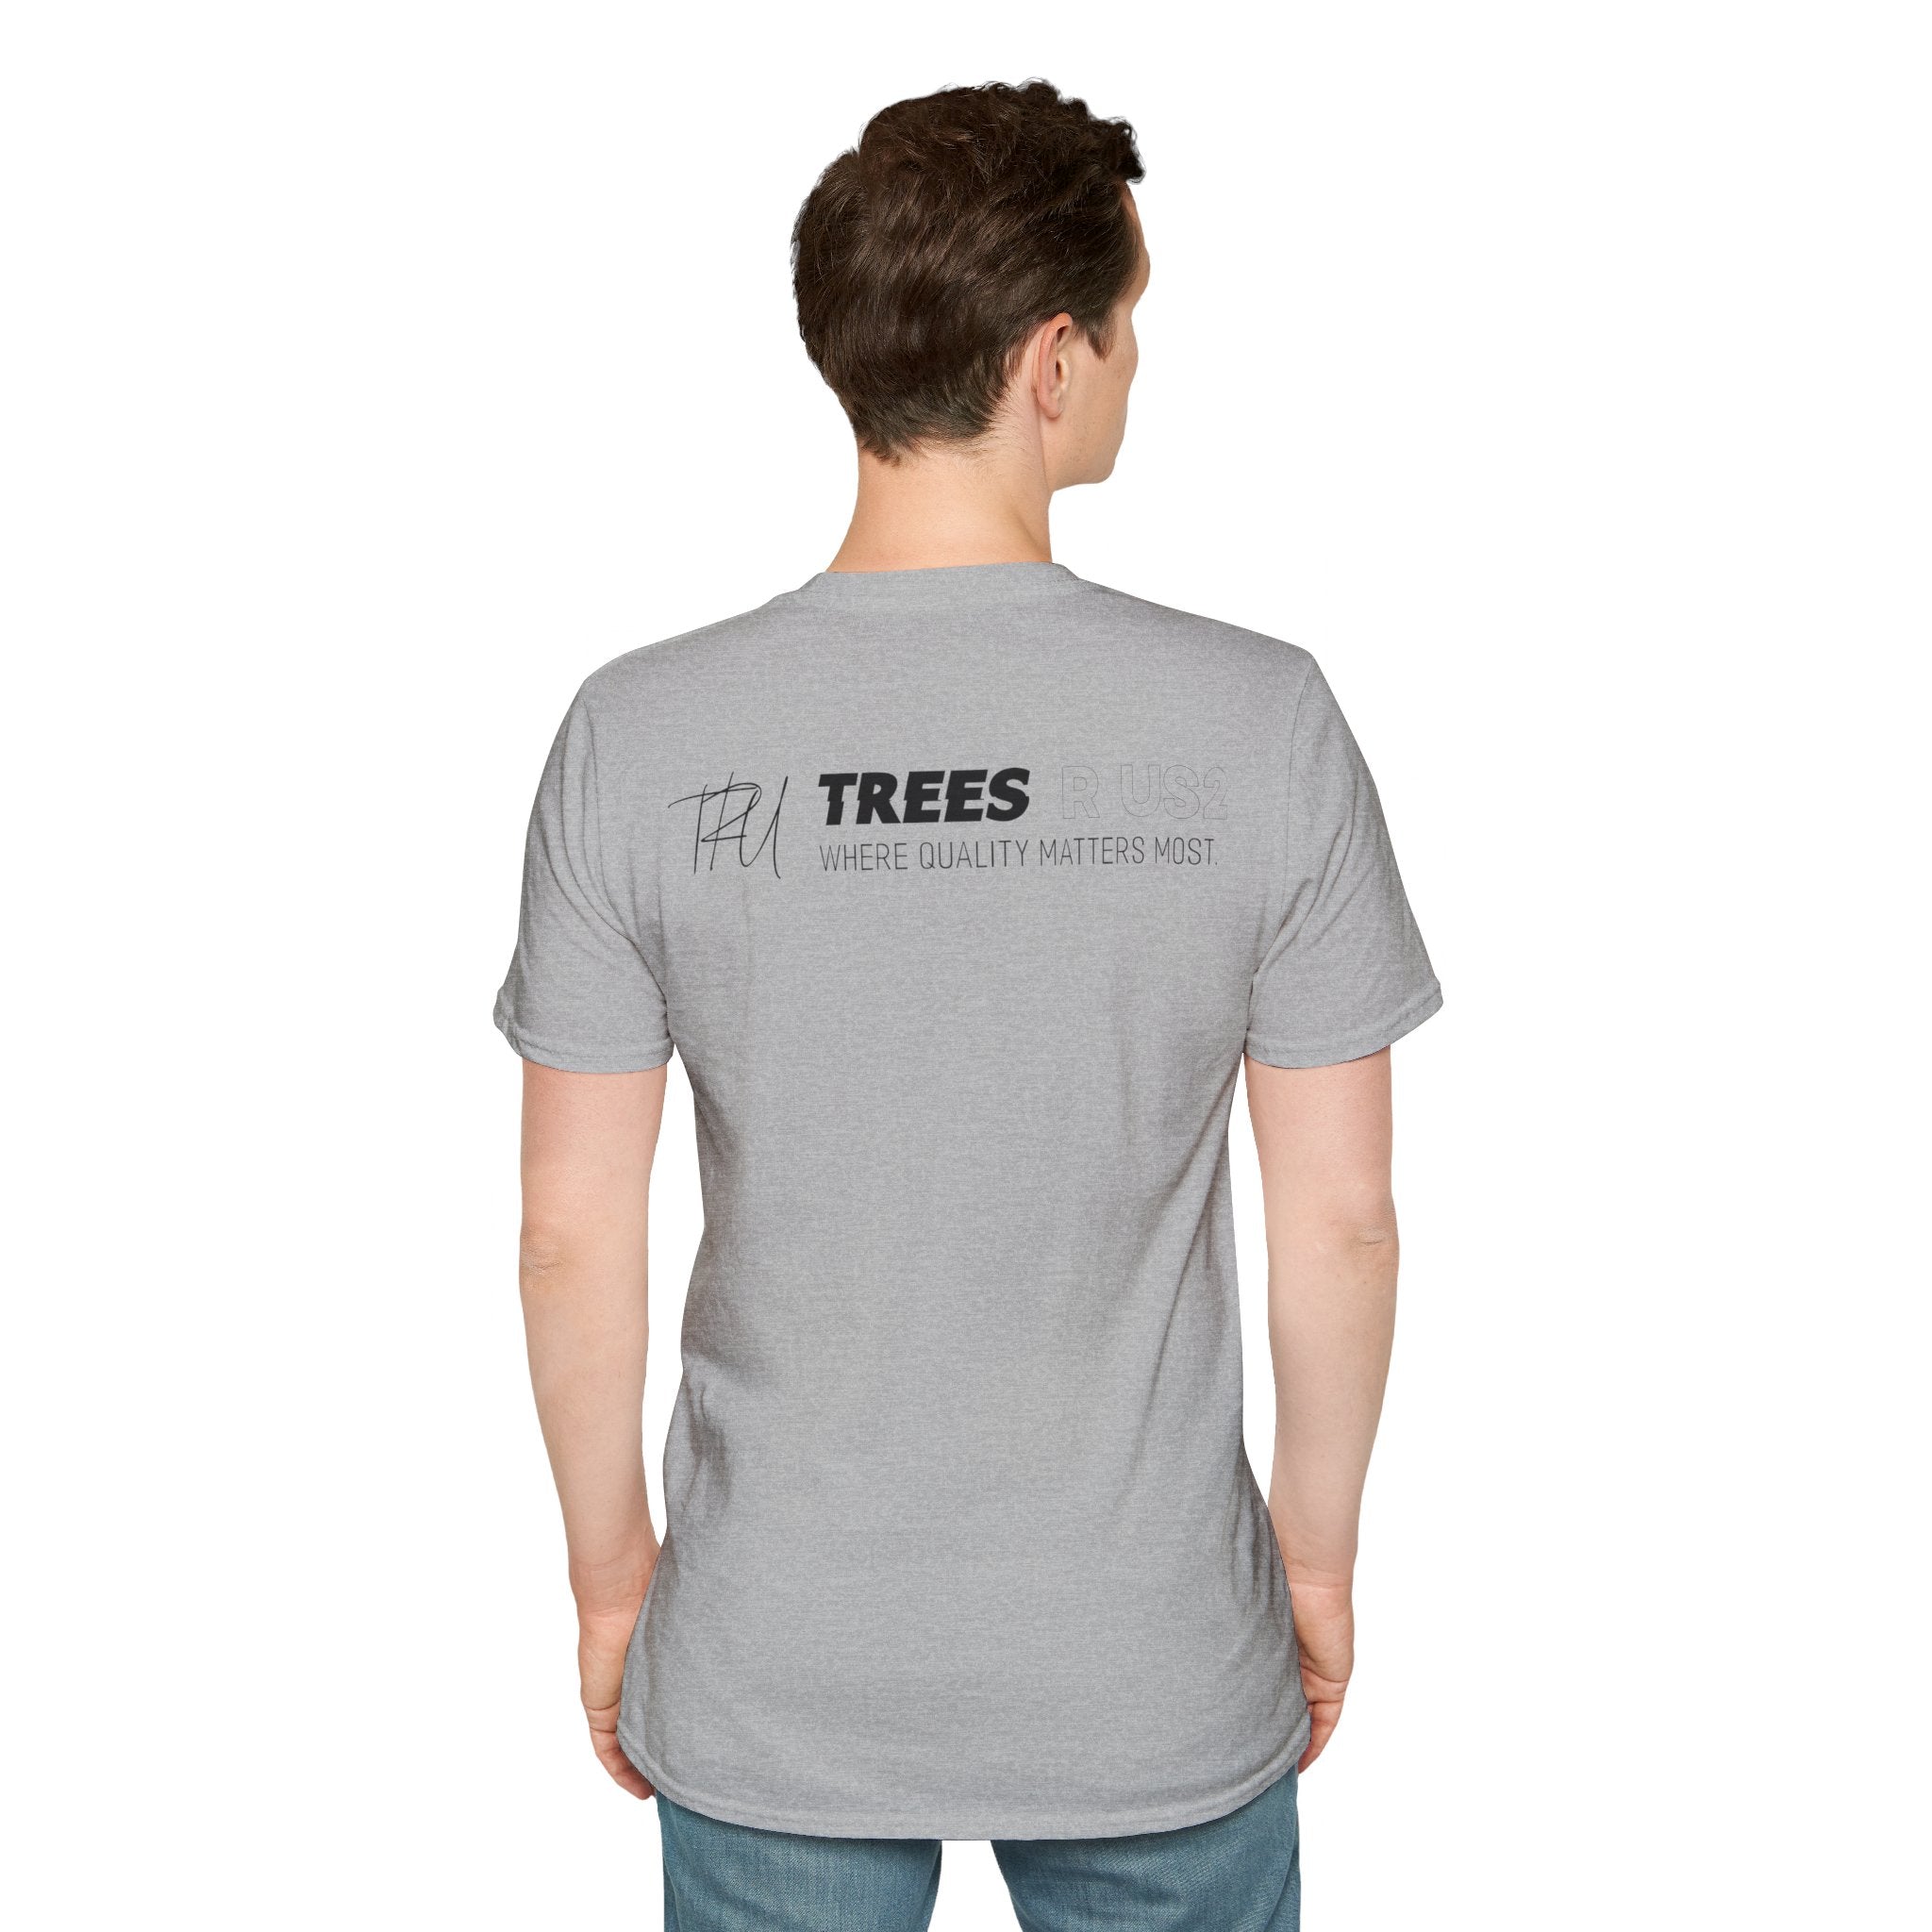 Lying Joe Tee - TreesRus2 Clothing